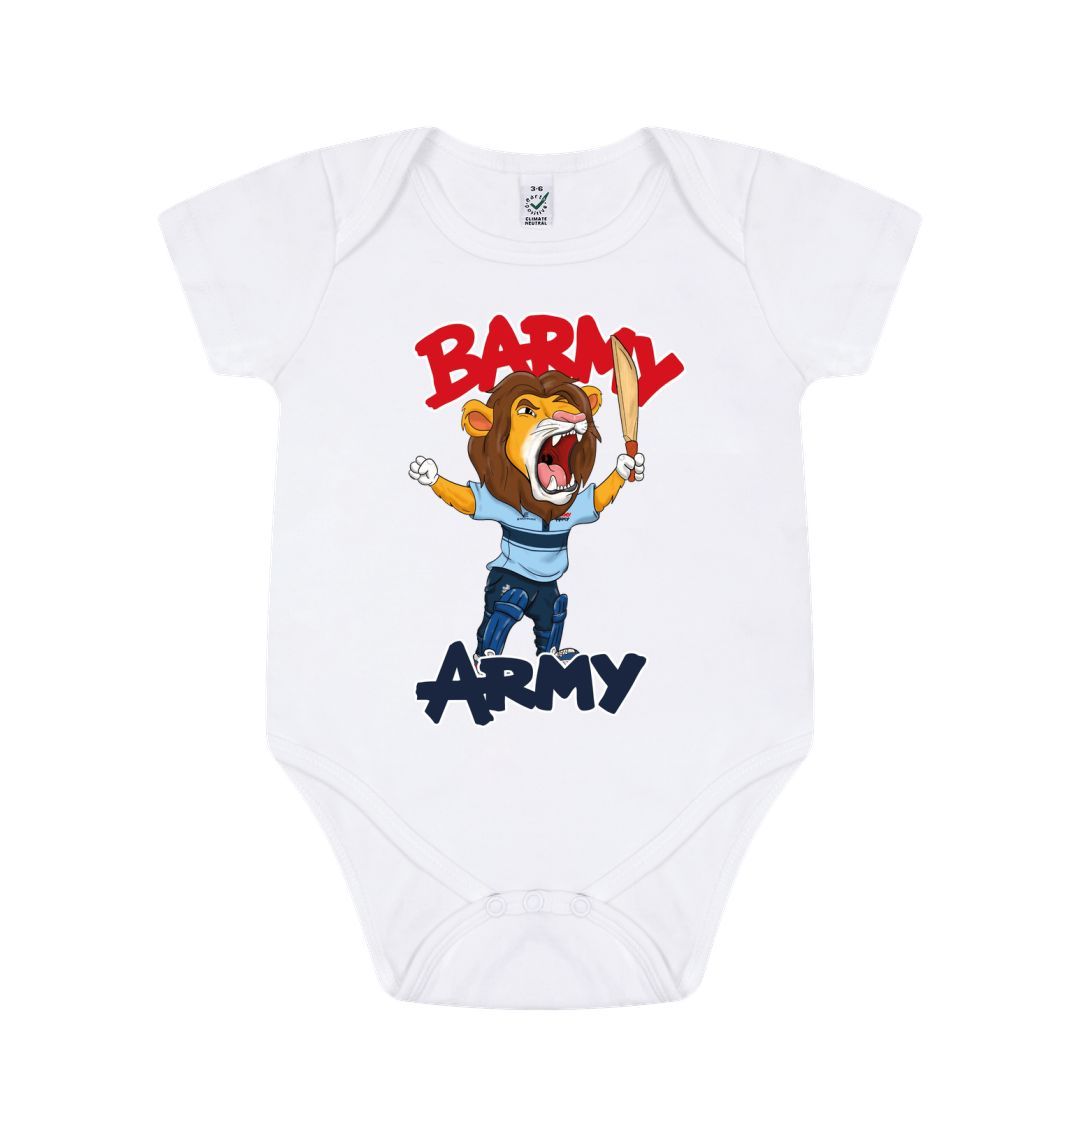 White Barmy Army Mascot Ton Up Baby Grow